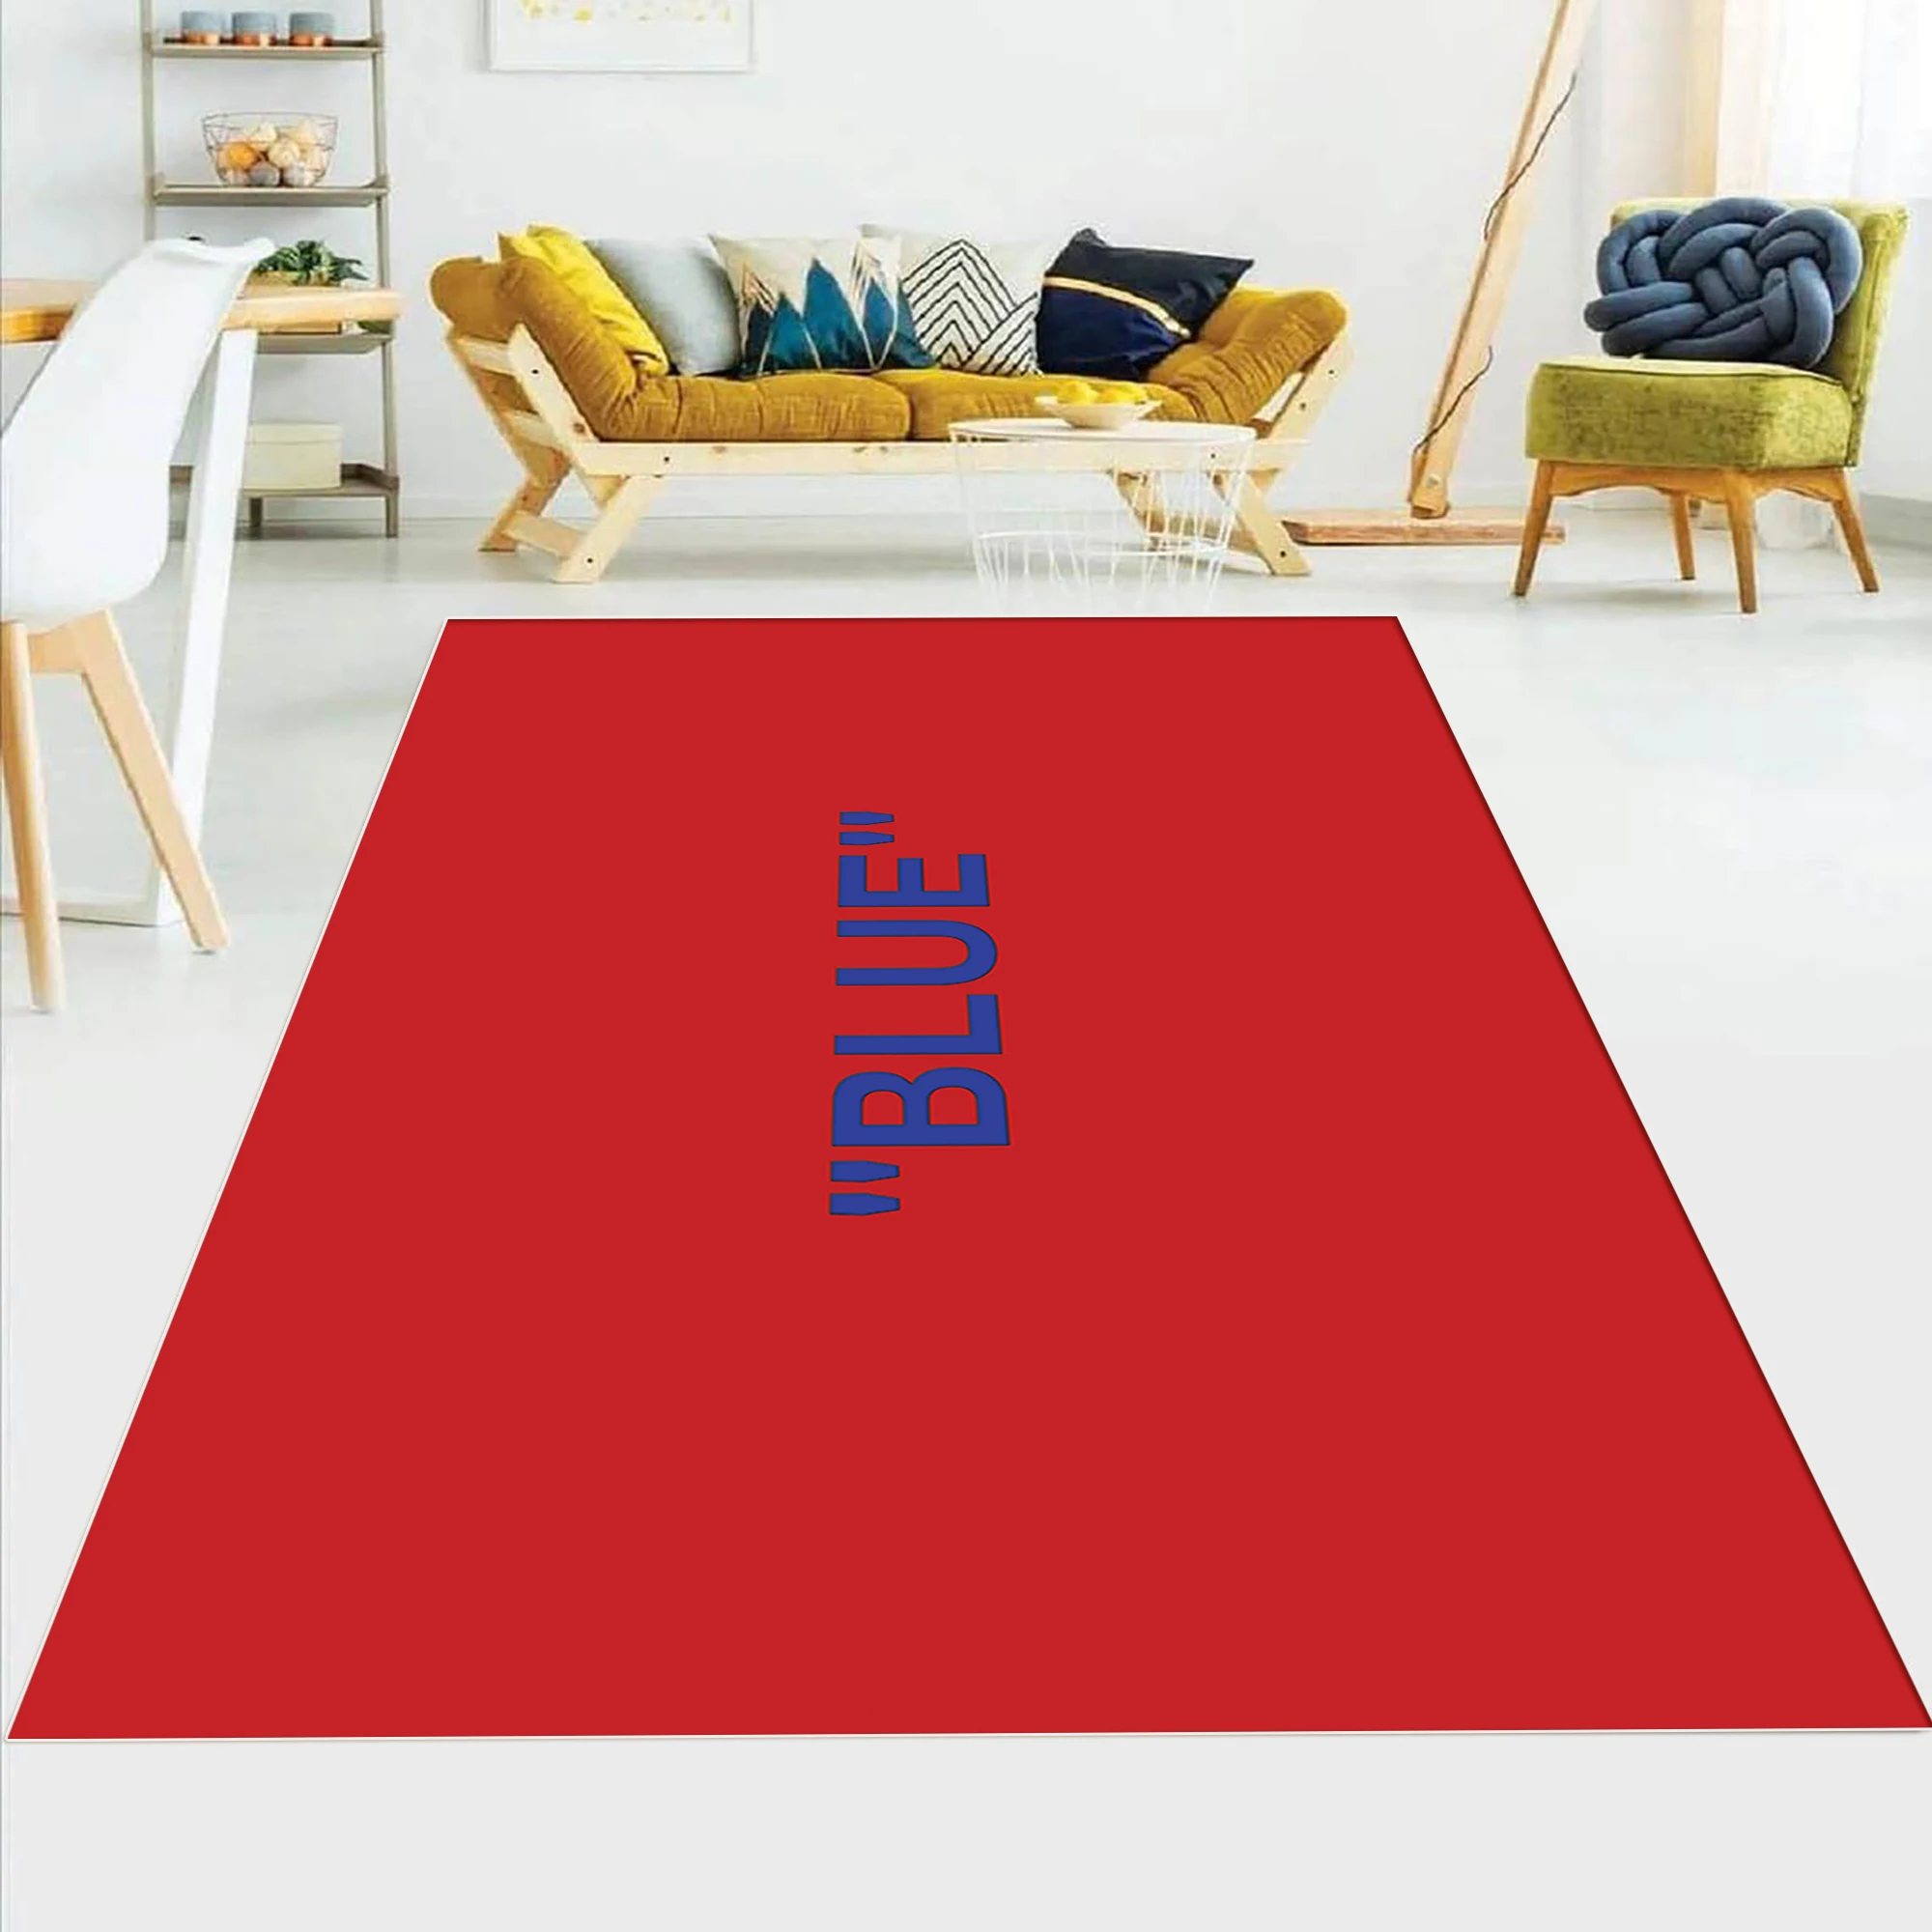 Keep off Rug, Keep off Carpet, for Living Room, Fan Carpet, Area